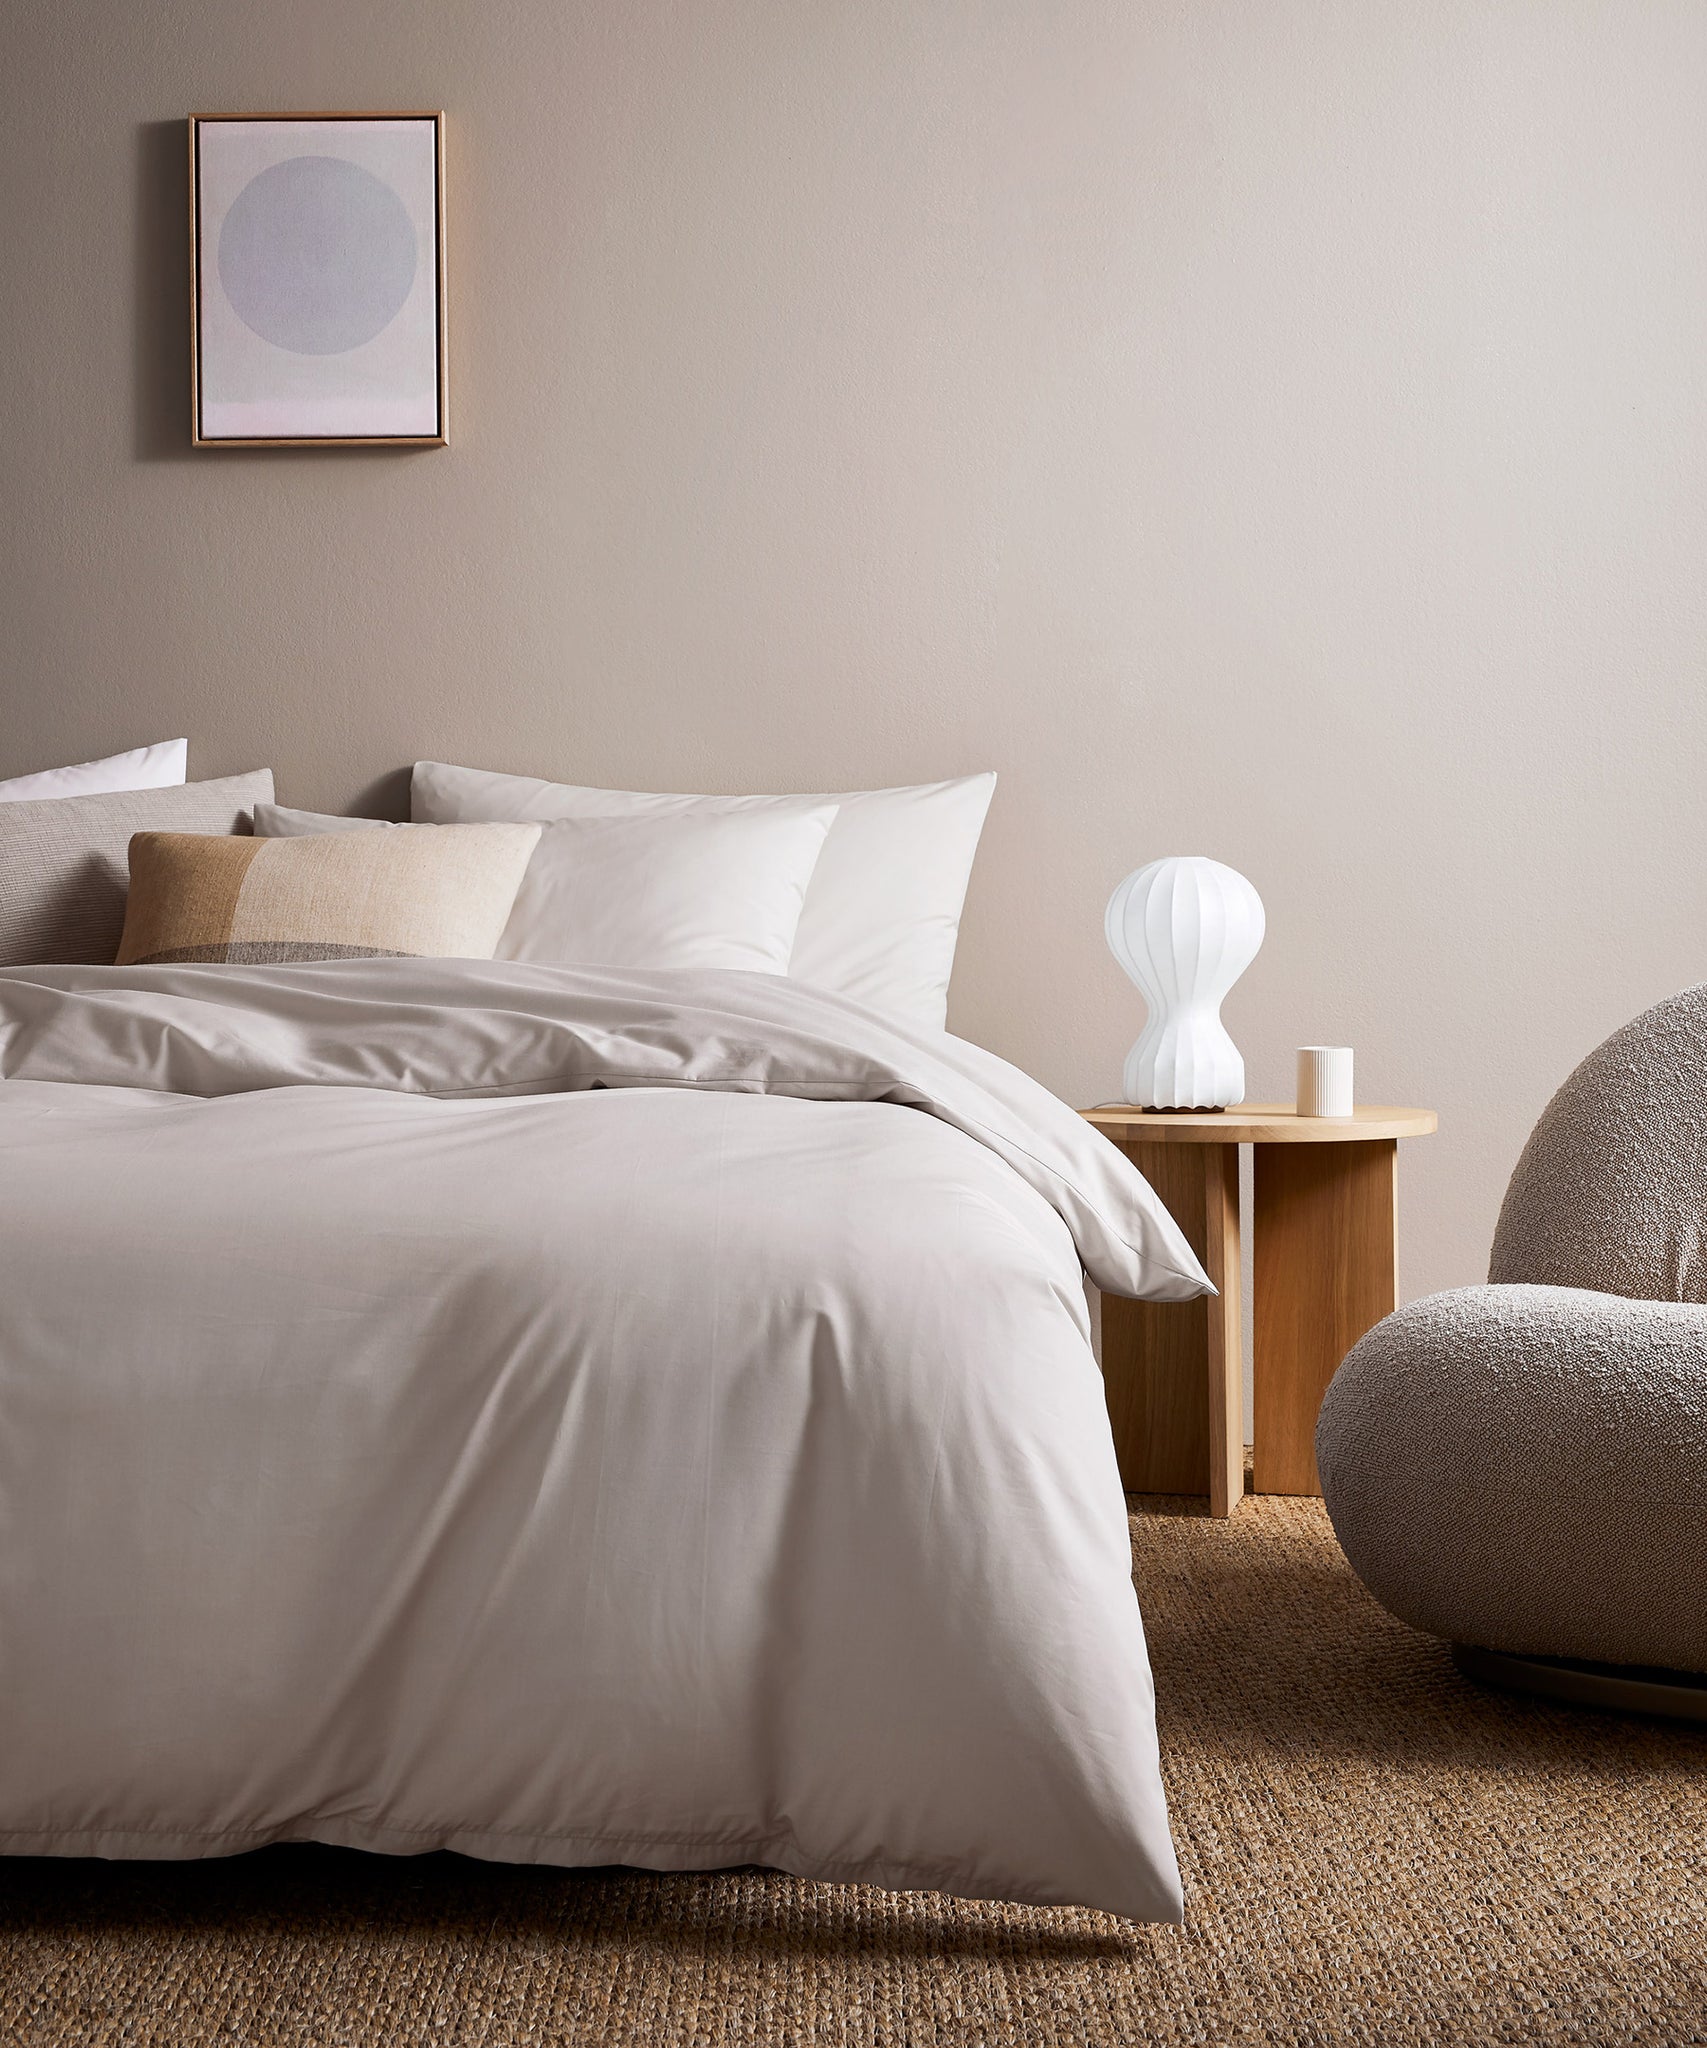 sand colour tencel cotton bed linen in minimalist bedroom